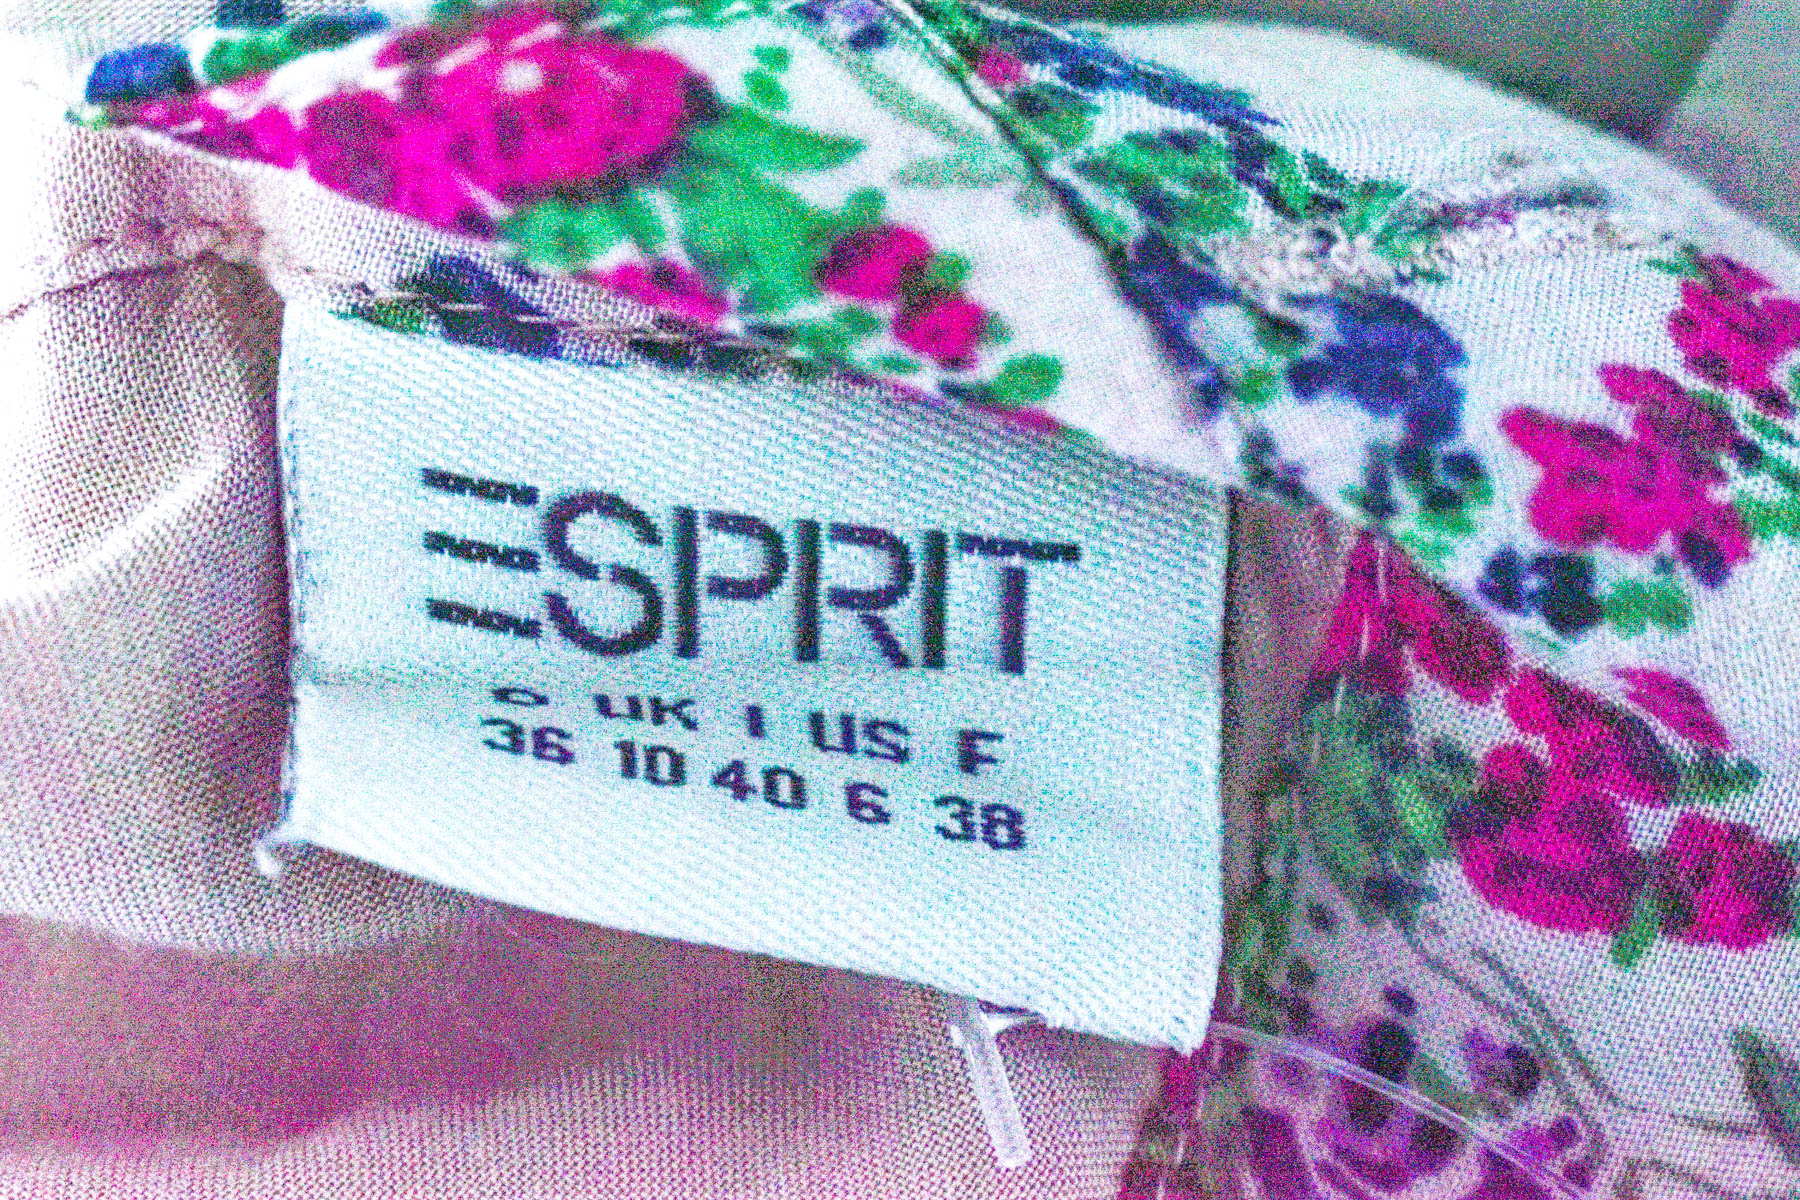 Dress - ESPRIT - 2